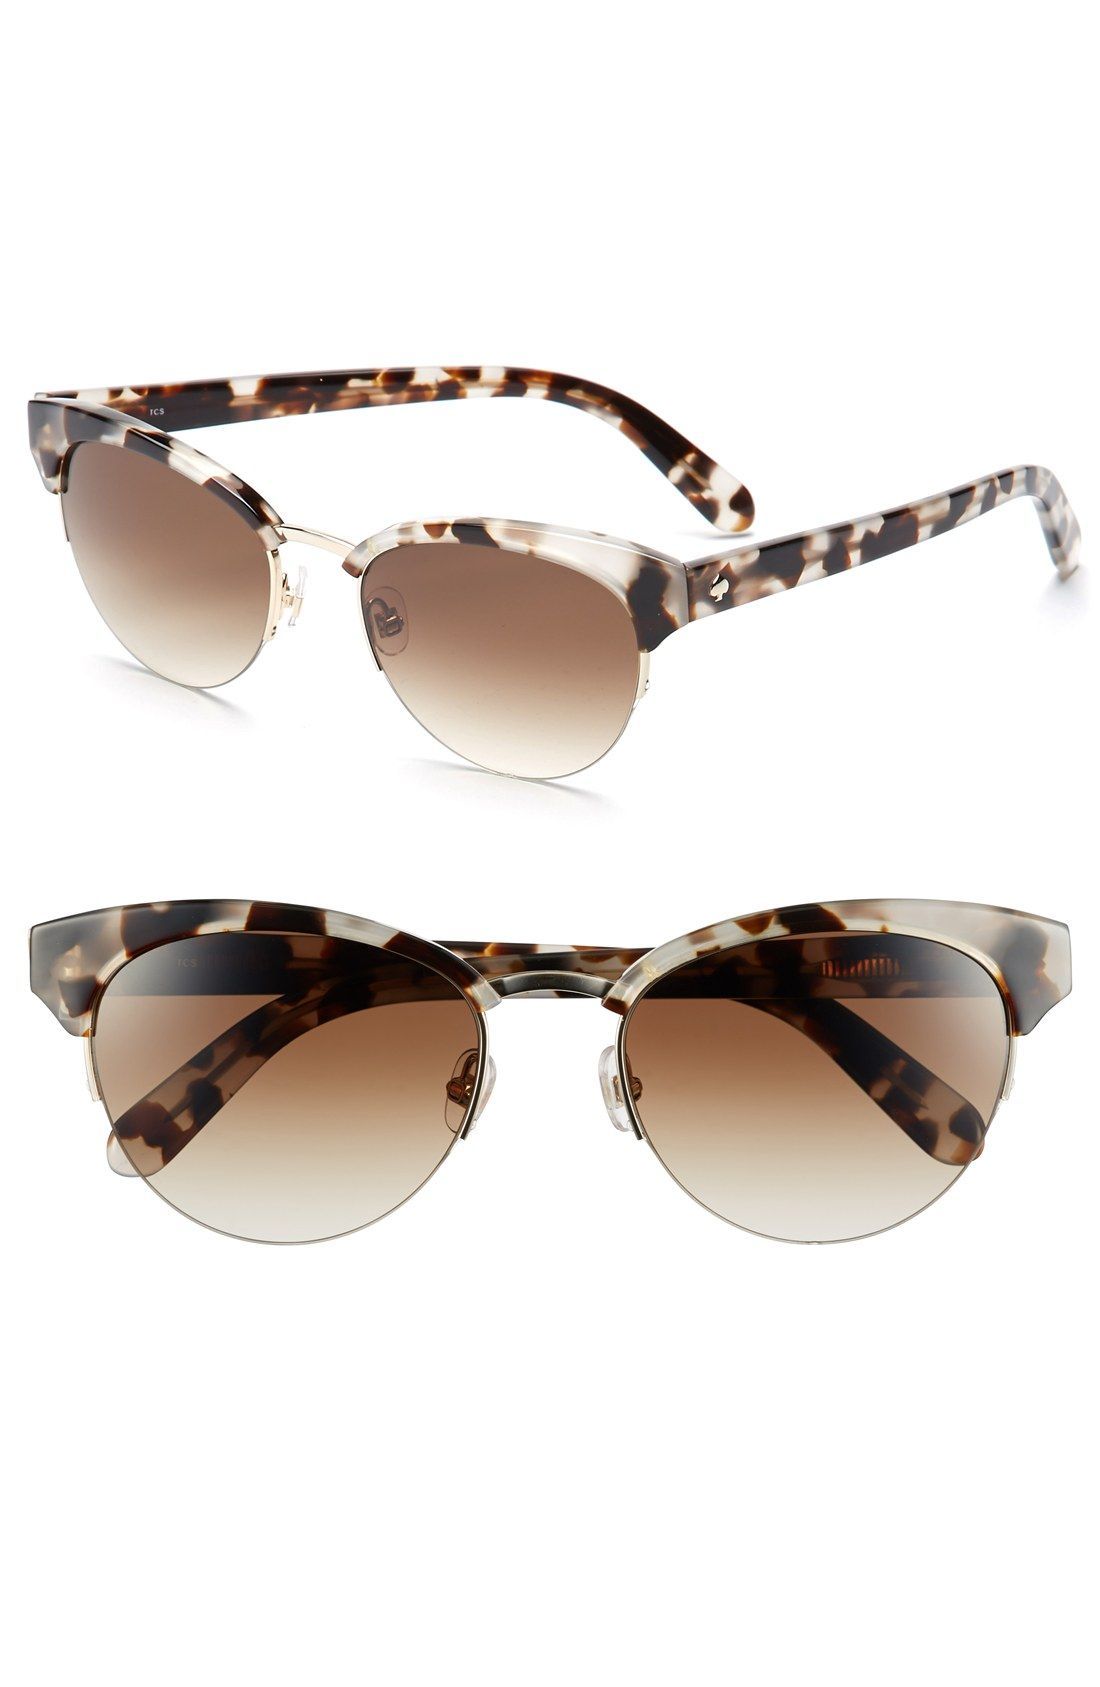 Classy Kate Spade cat eye sunglasses in speckled tortoise.